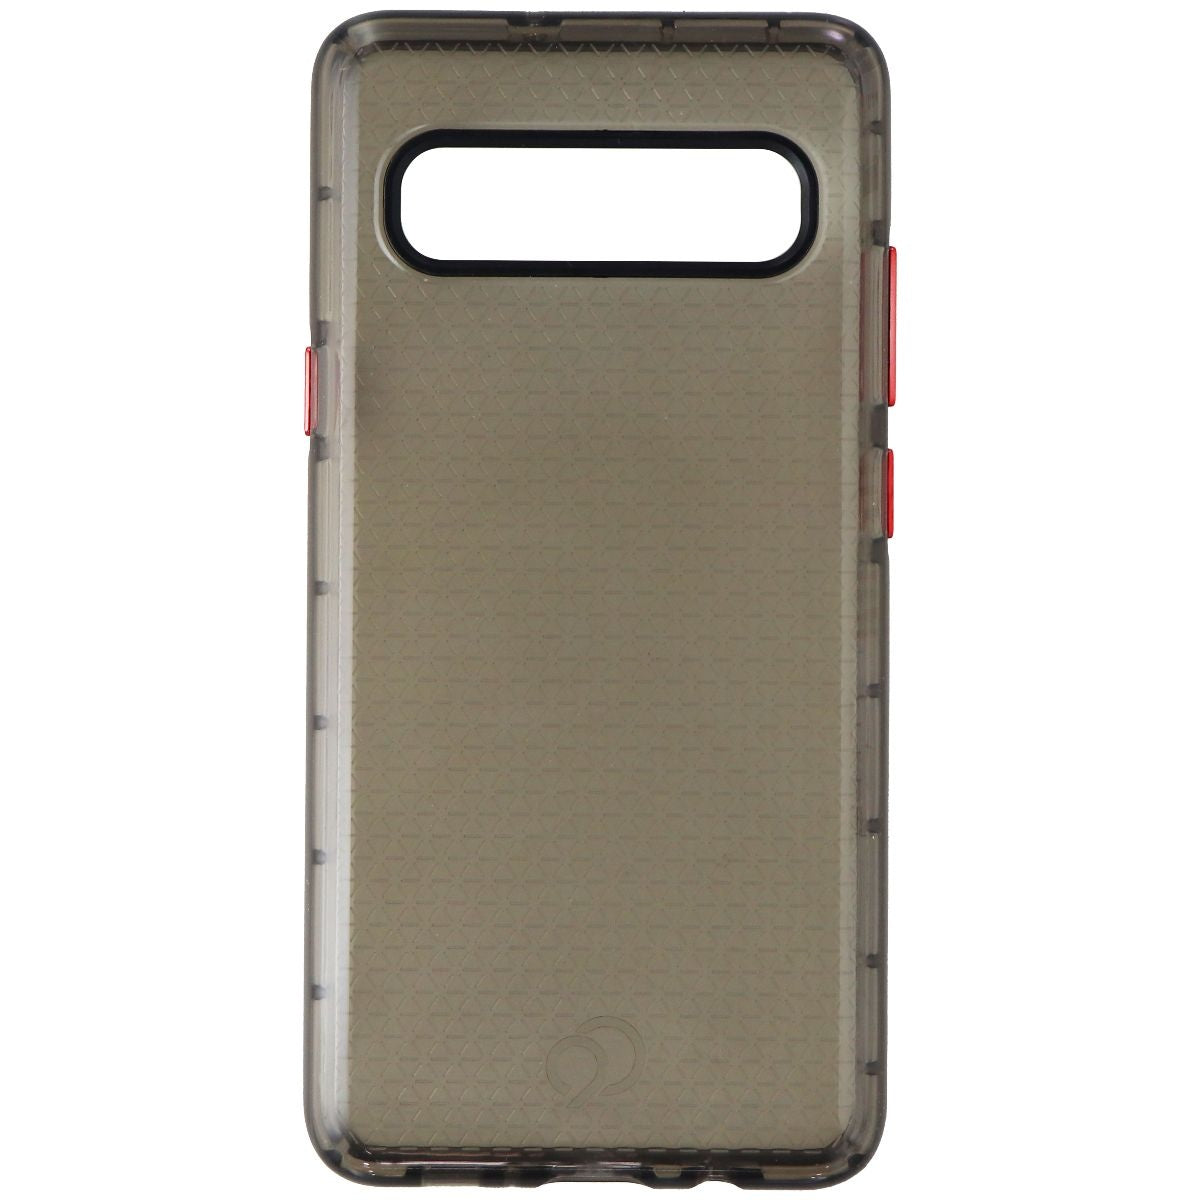 Nimbus9 Phantom 2 Flexible Gel Case for Samsung Galaxy S10 5G - Smoke Black Cell Phone - Cases, Covers & Skins Nimbus9    - Simple Cell Bulk Wholesale Pricing - USA Seller